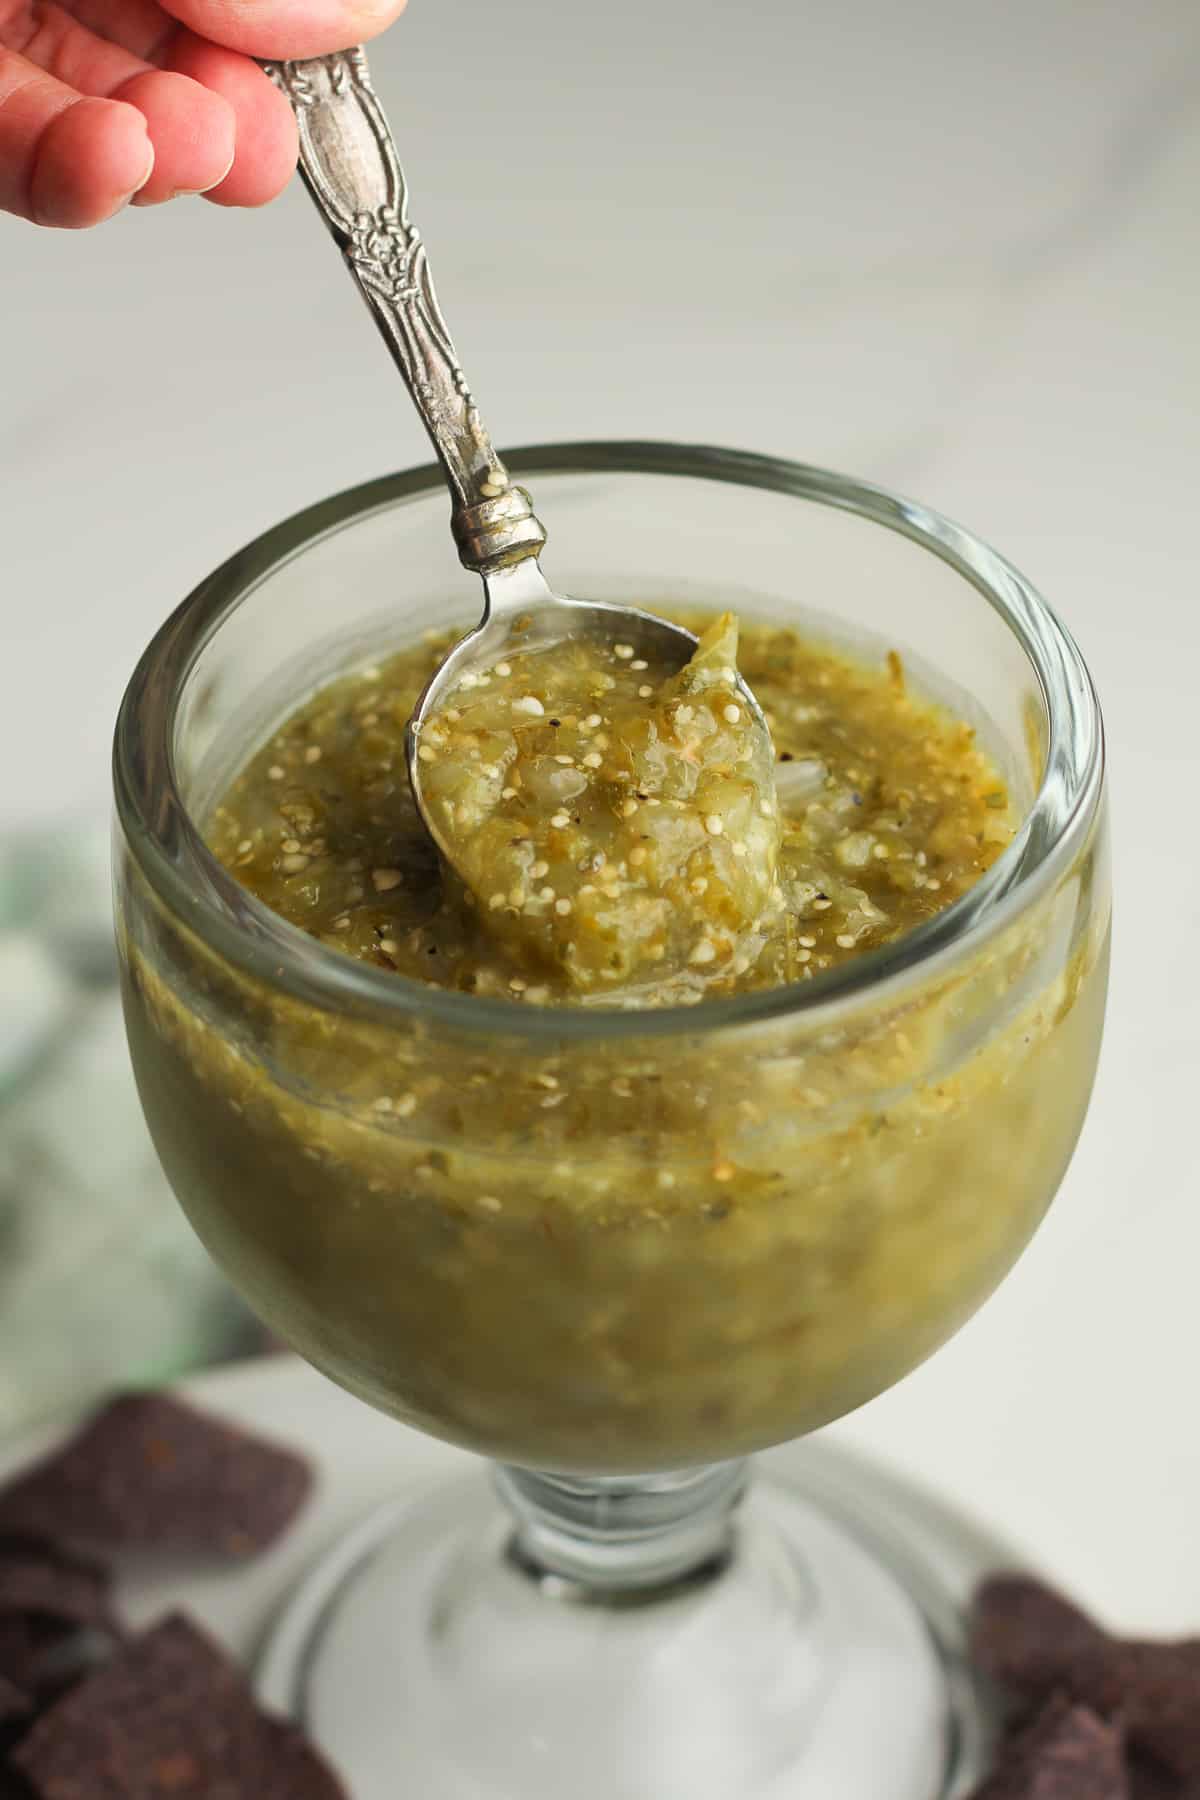 A spoonful of homemade salsa verde.